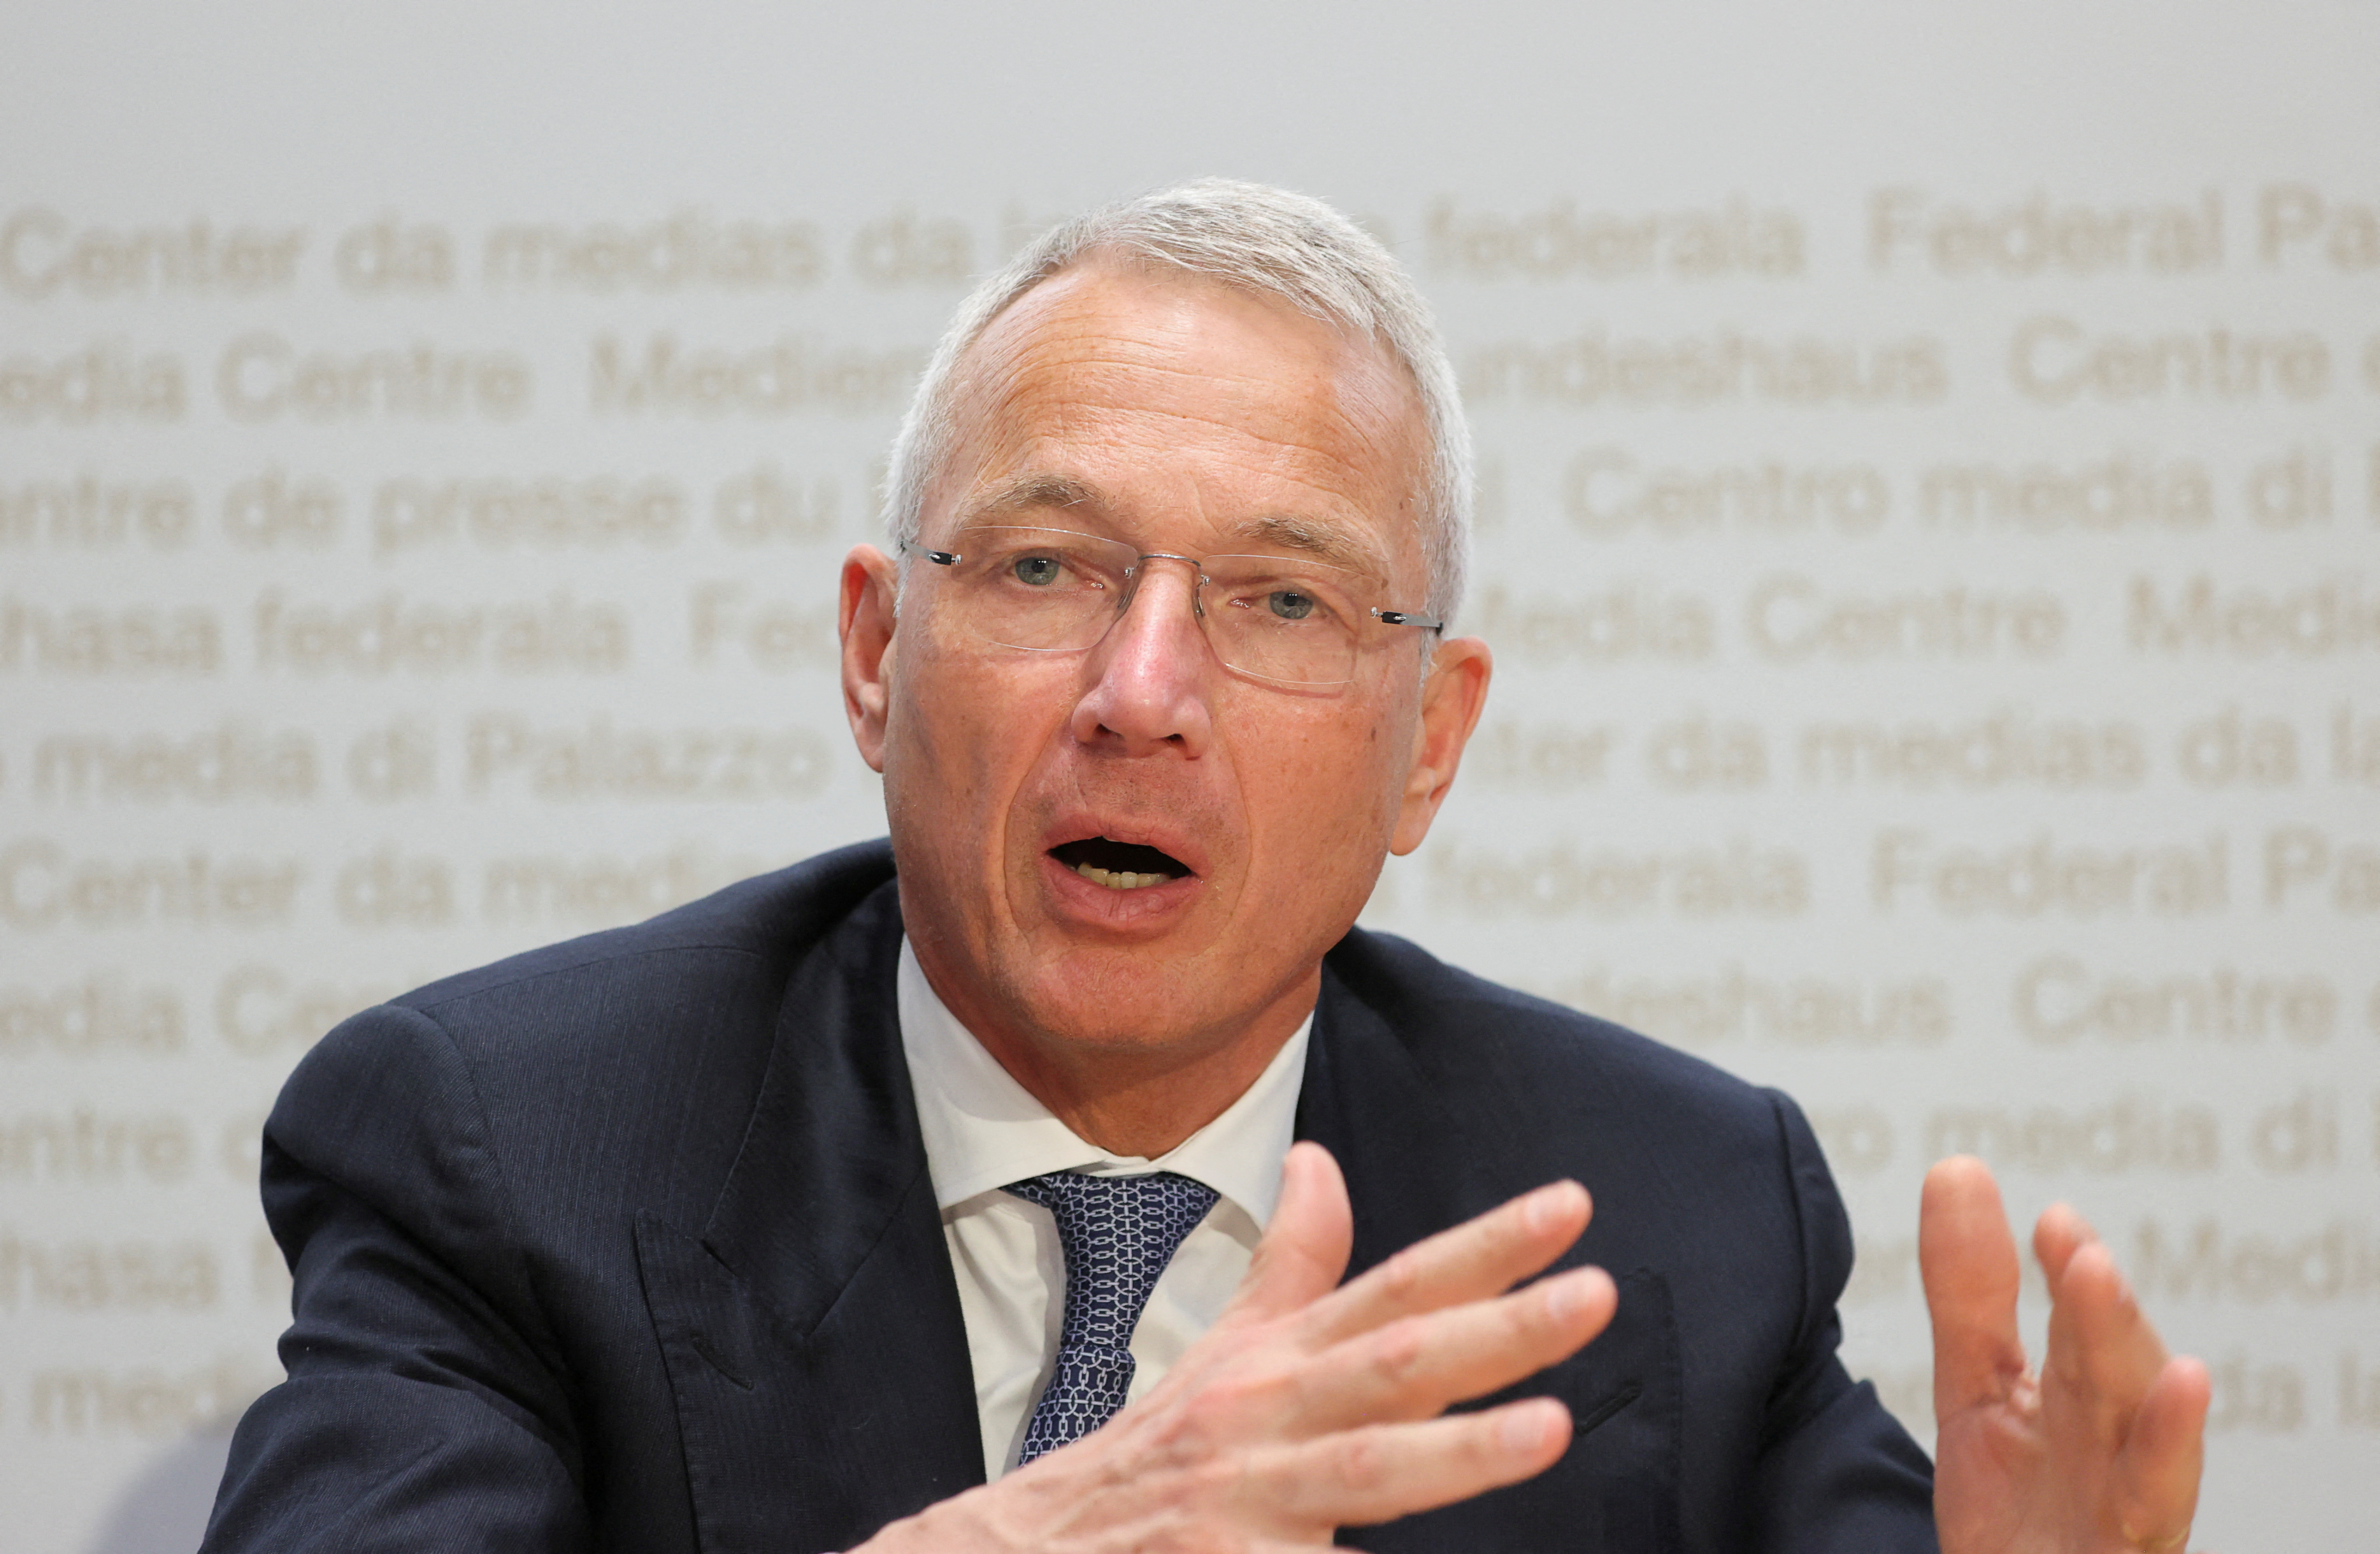 Credit Suisse Chairman Axel Lehmann